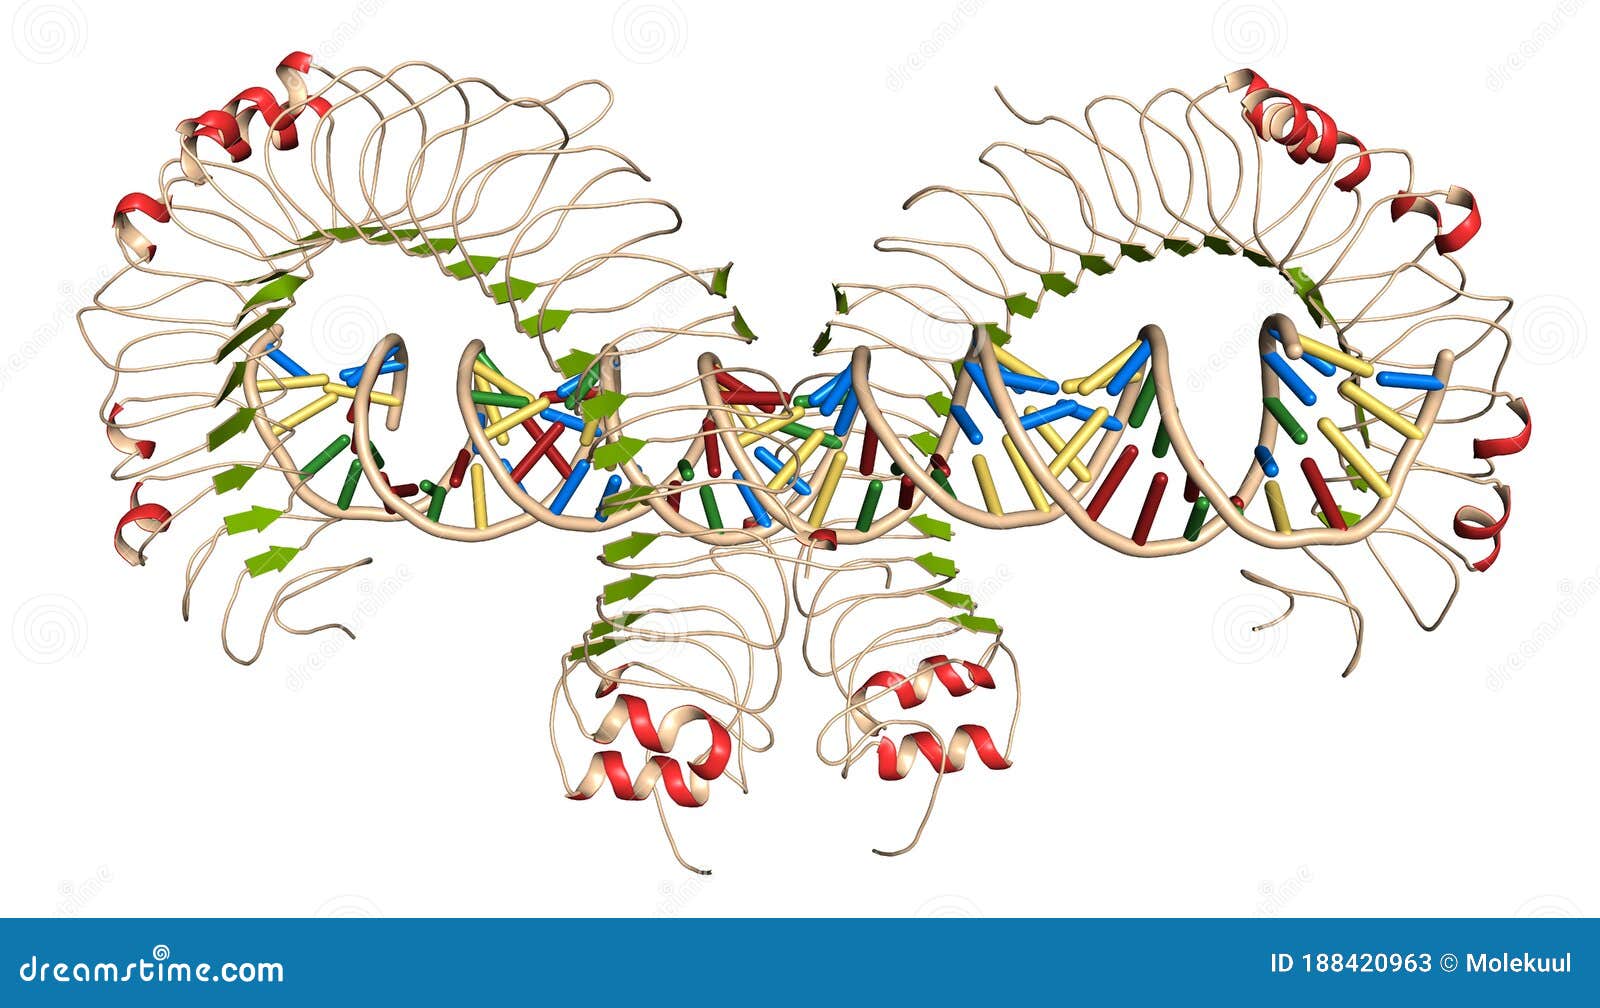 Toll Like Receptor 3 Tlr3 Murine Ectodomain Protein Bound To Double Stranded Rna Involved In Host Defense Against Viruses Stock Illustration Illustration Of Doublestranded Cd2